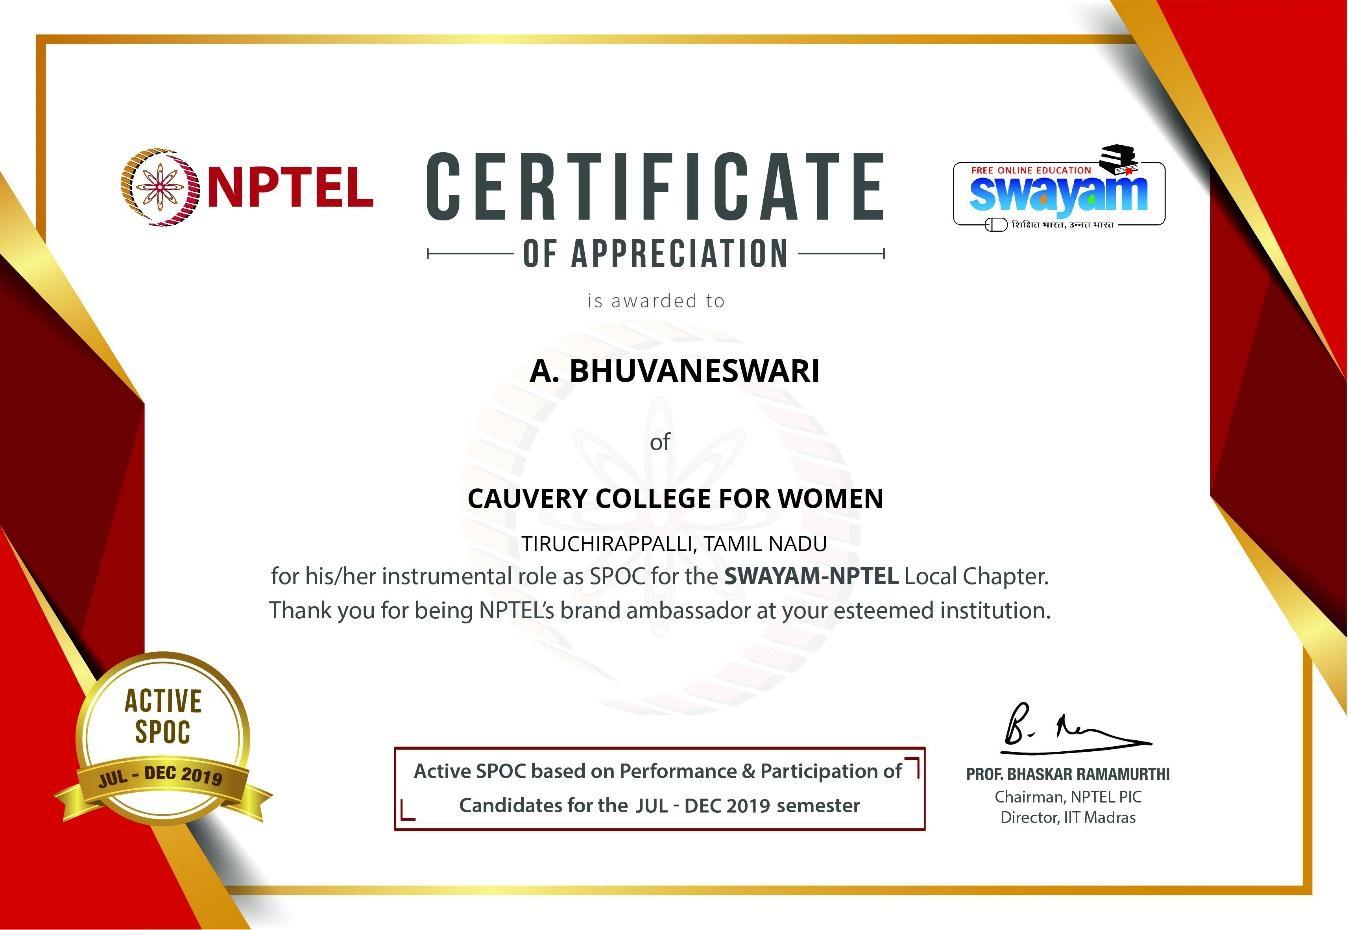 \\server1\server\staff\IT DEPT\SWAYAM Bhuvana\Web Site\Achievements\Active SPoC - Jul - Dec 2019.jpg